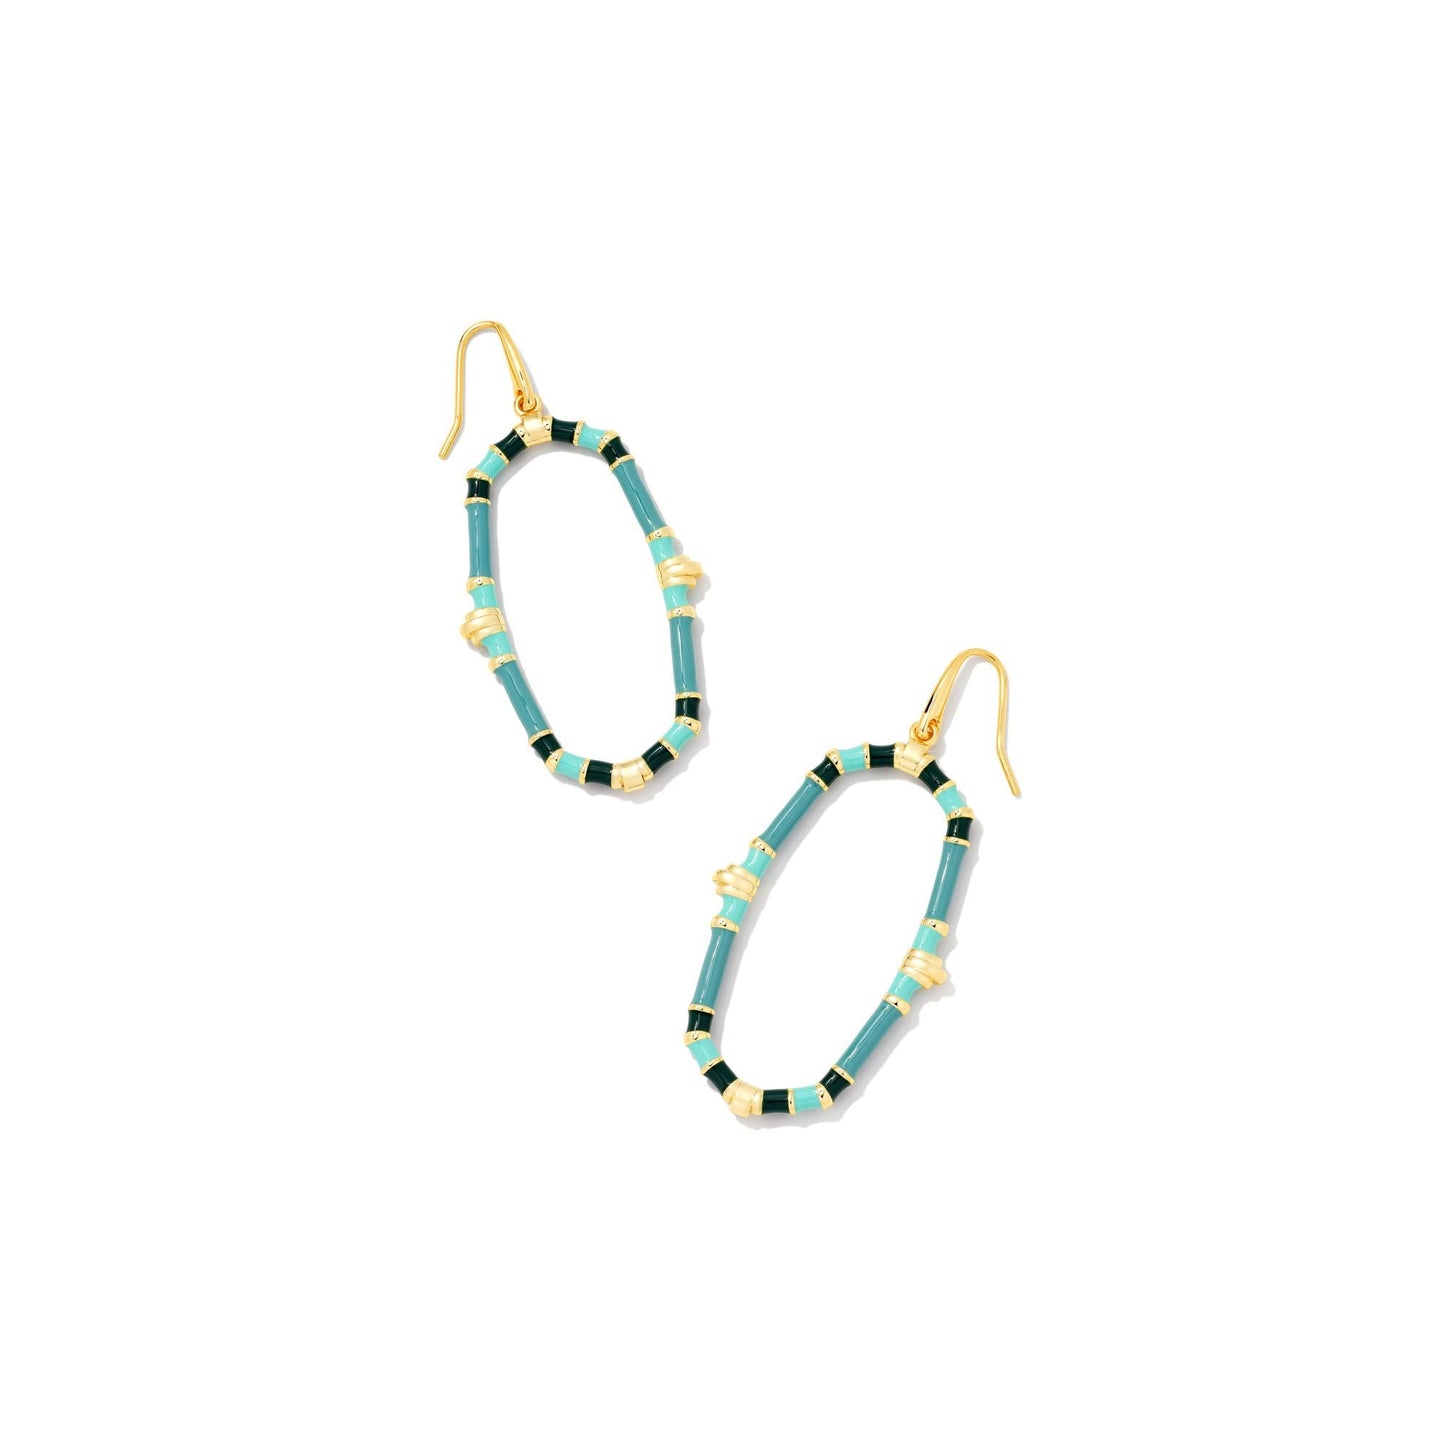 Essie Open Frame Earrings in Gold Sea Green Mix